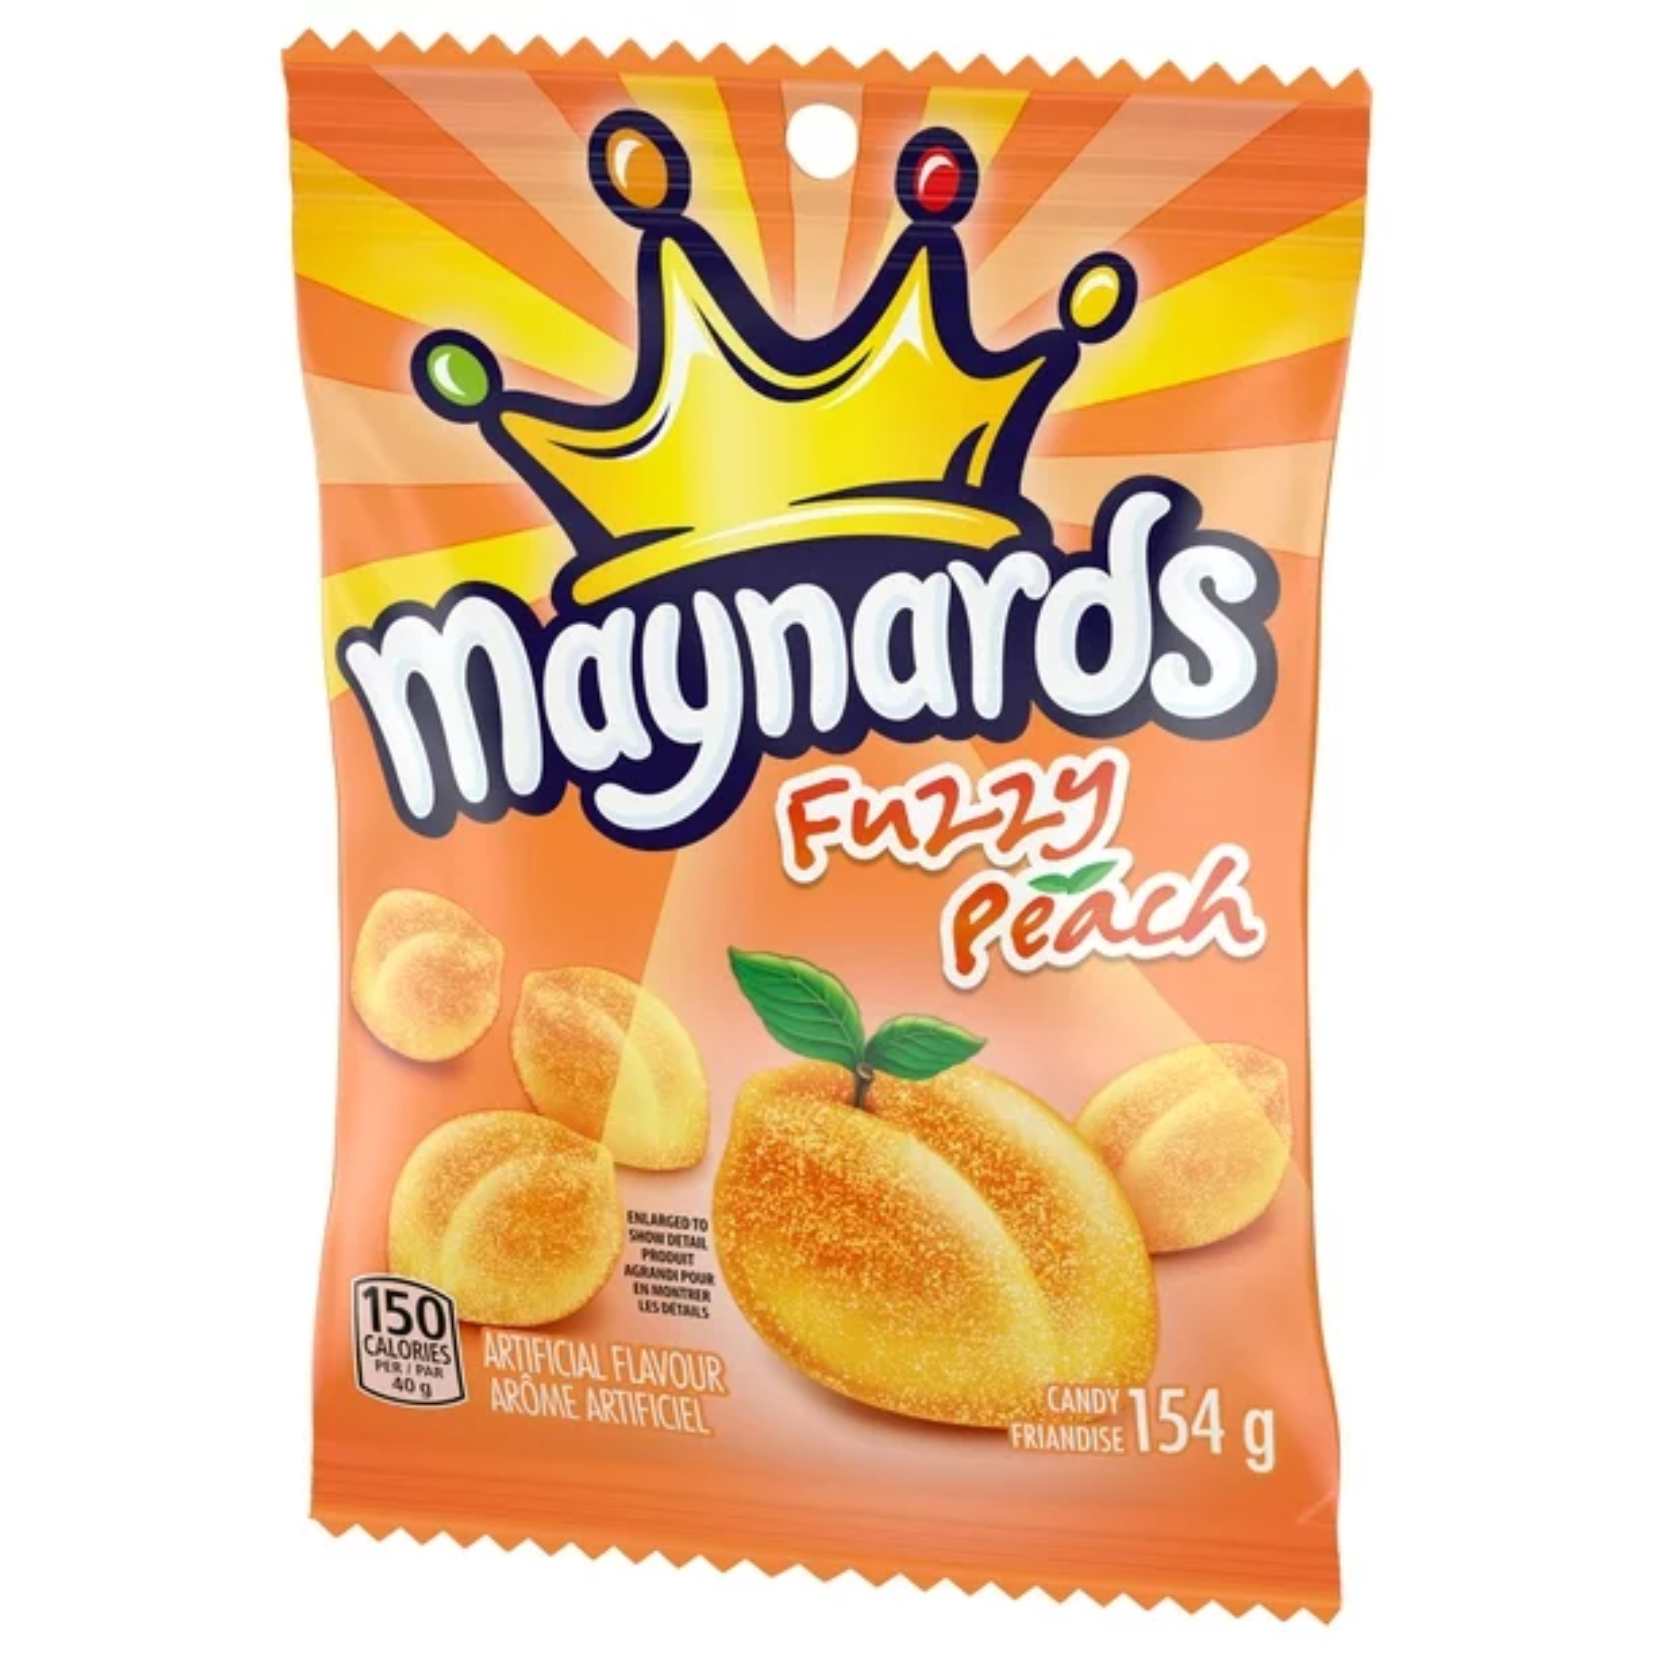 Maynards Fuzzy Peach Candy 154g